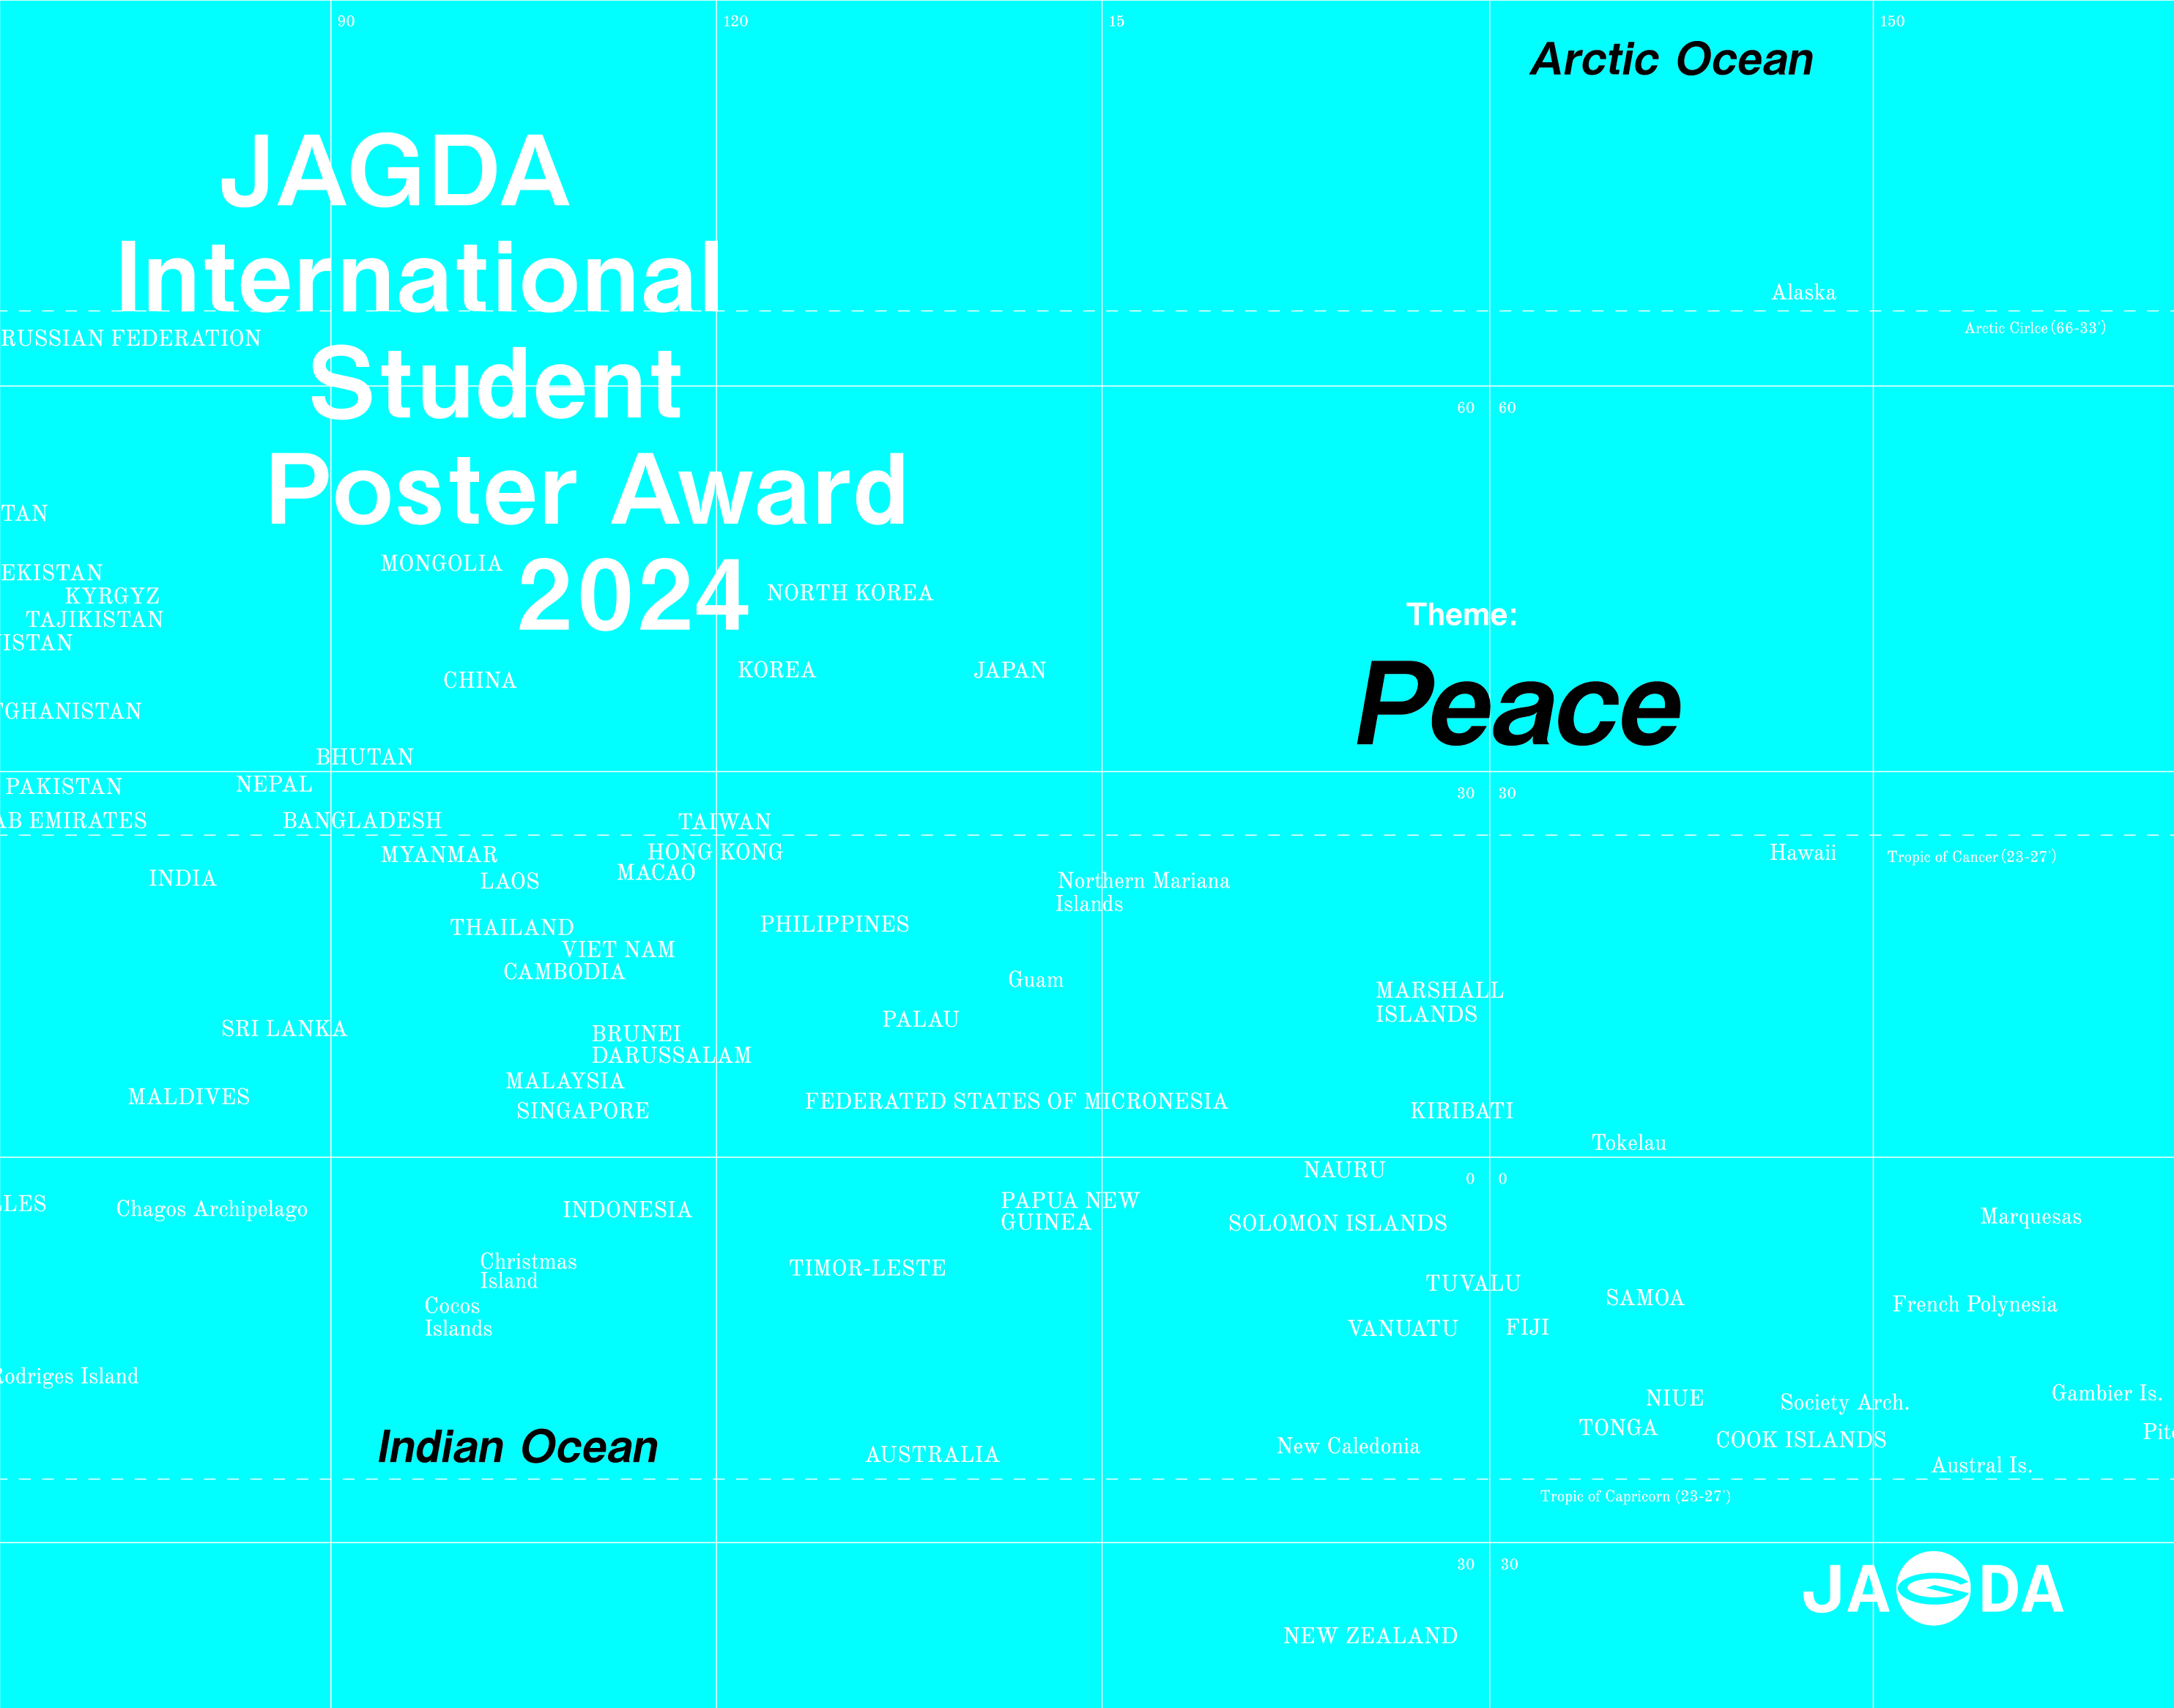 JAGDA INTERNATIONAL STUDENT POSTER AWARD 2021